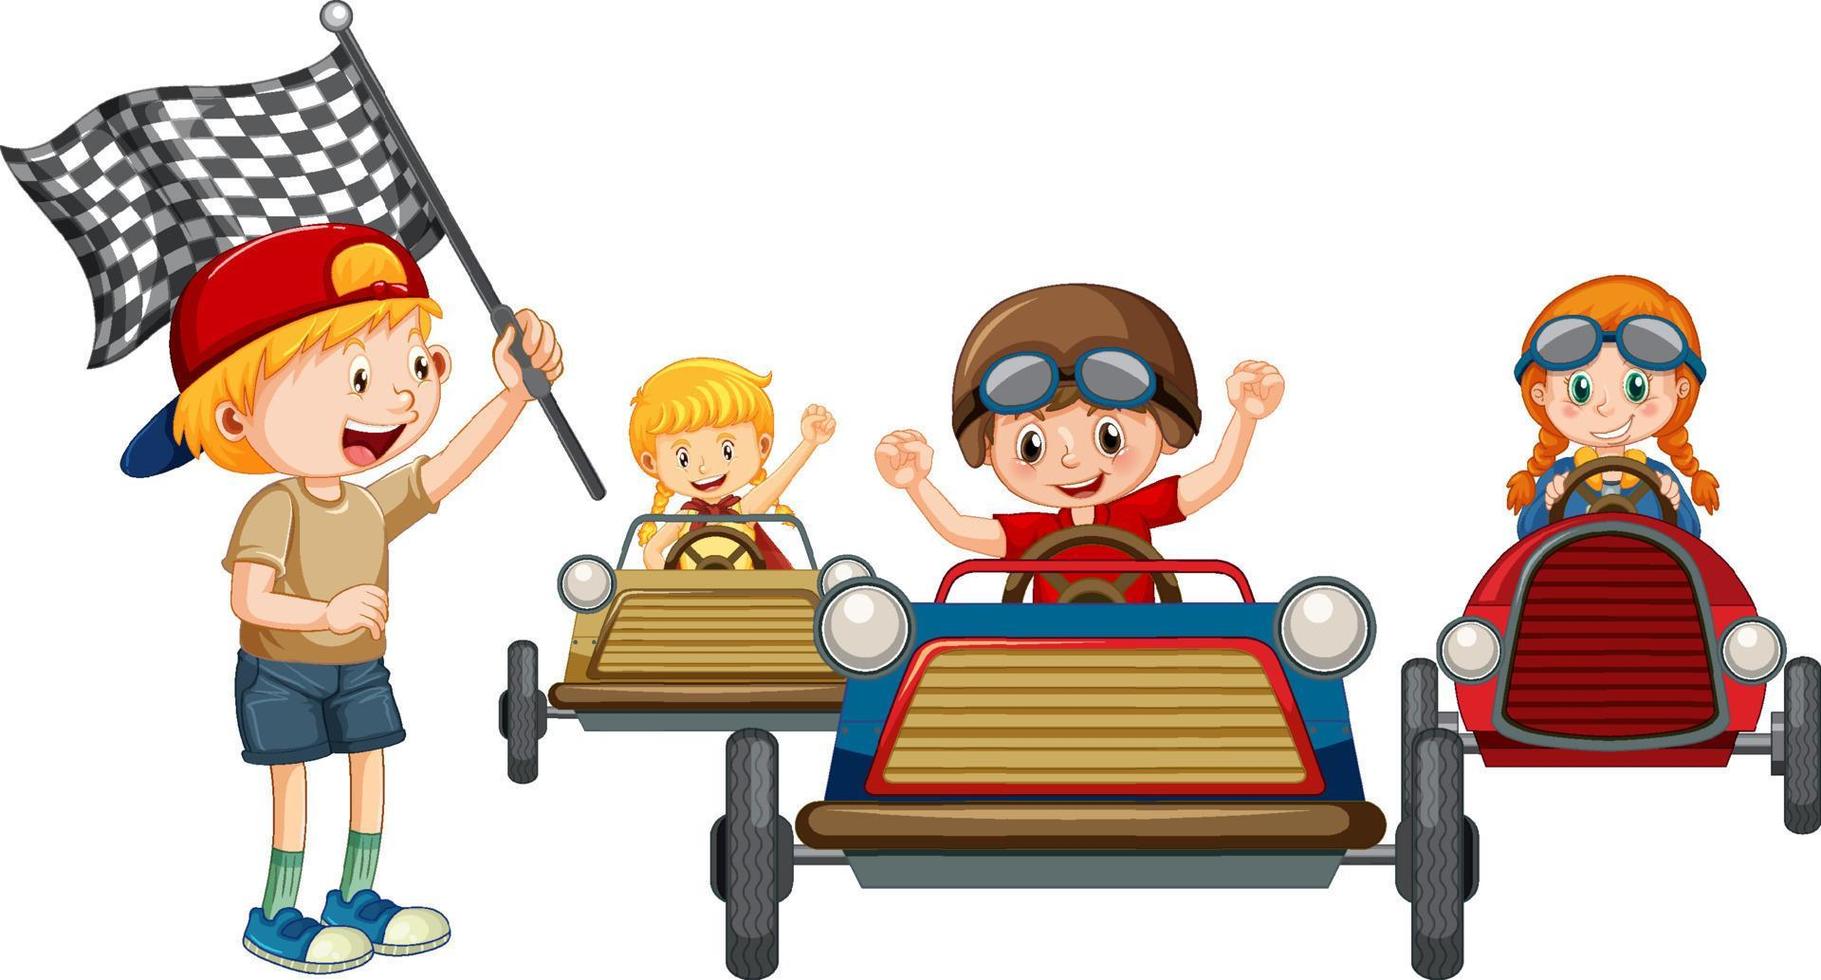 Children racing car together vector